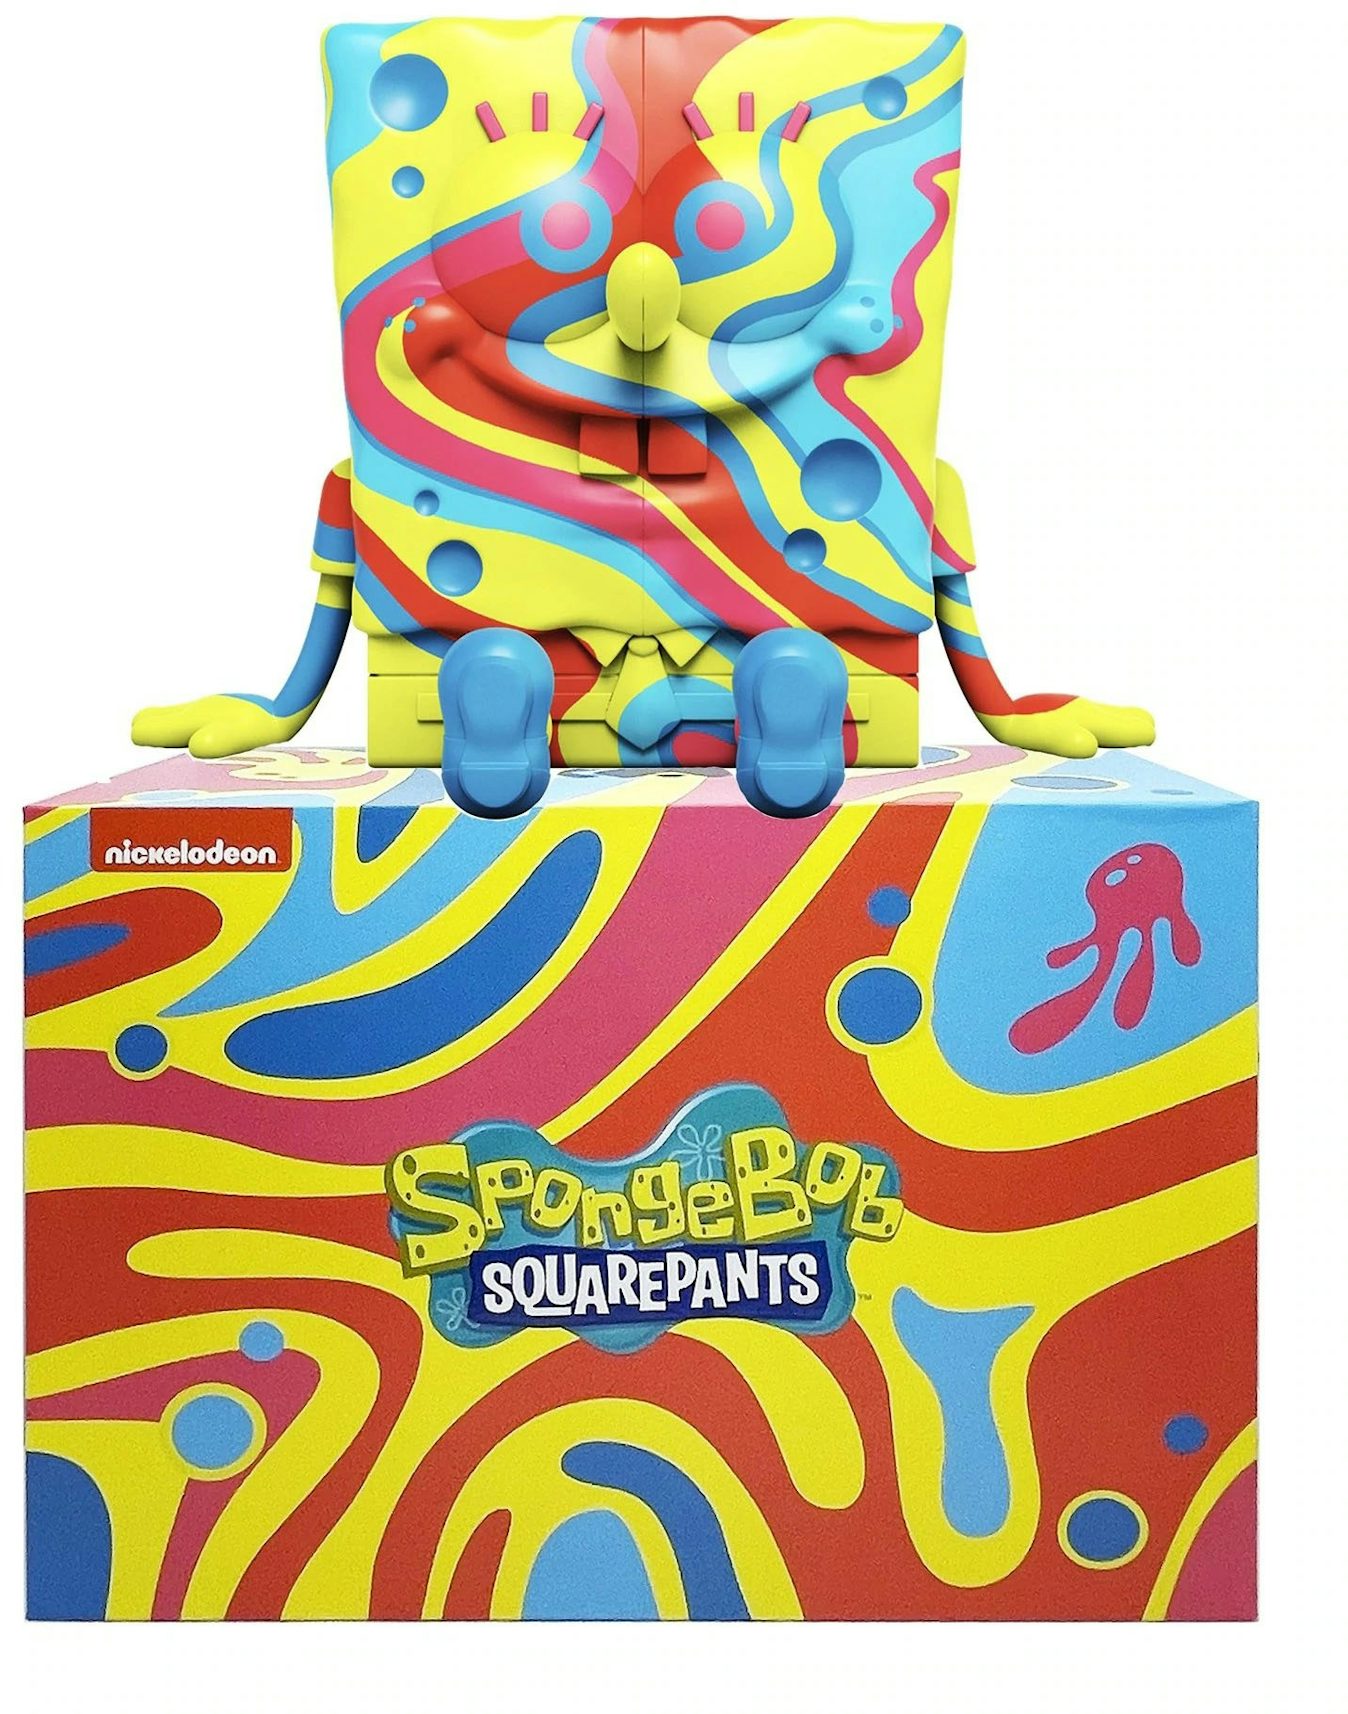  Mighty Jaxx Freeny's Hidden Dissectibles : Spongebob  Squarepants Series 04 (Super Edition) - Art Collectibles, Single Box, Multicolor